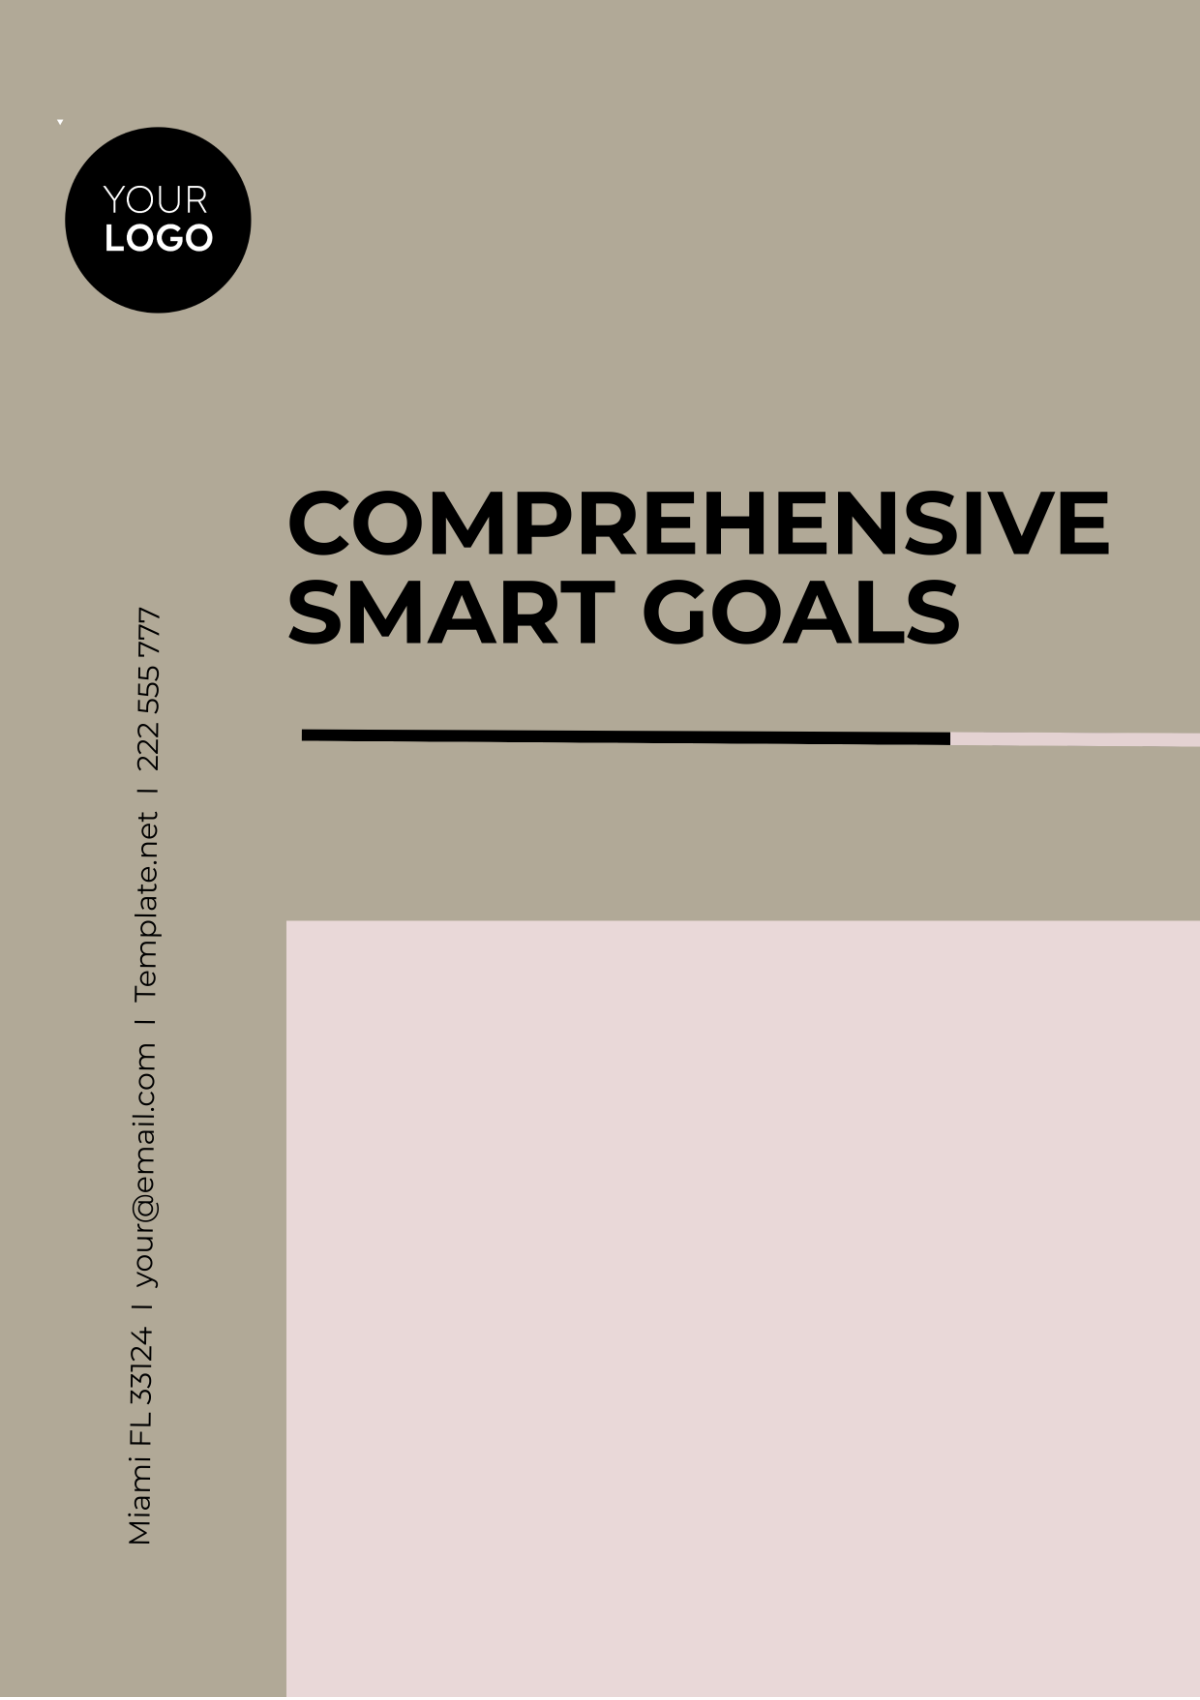 Comprehensive SMART Goals Template